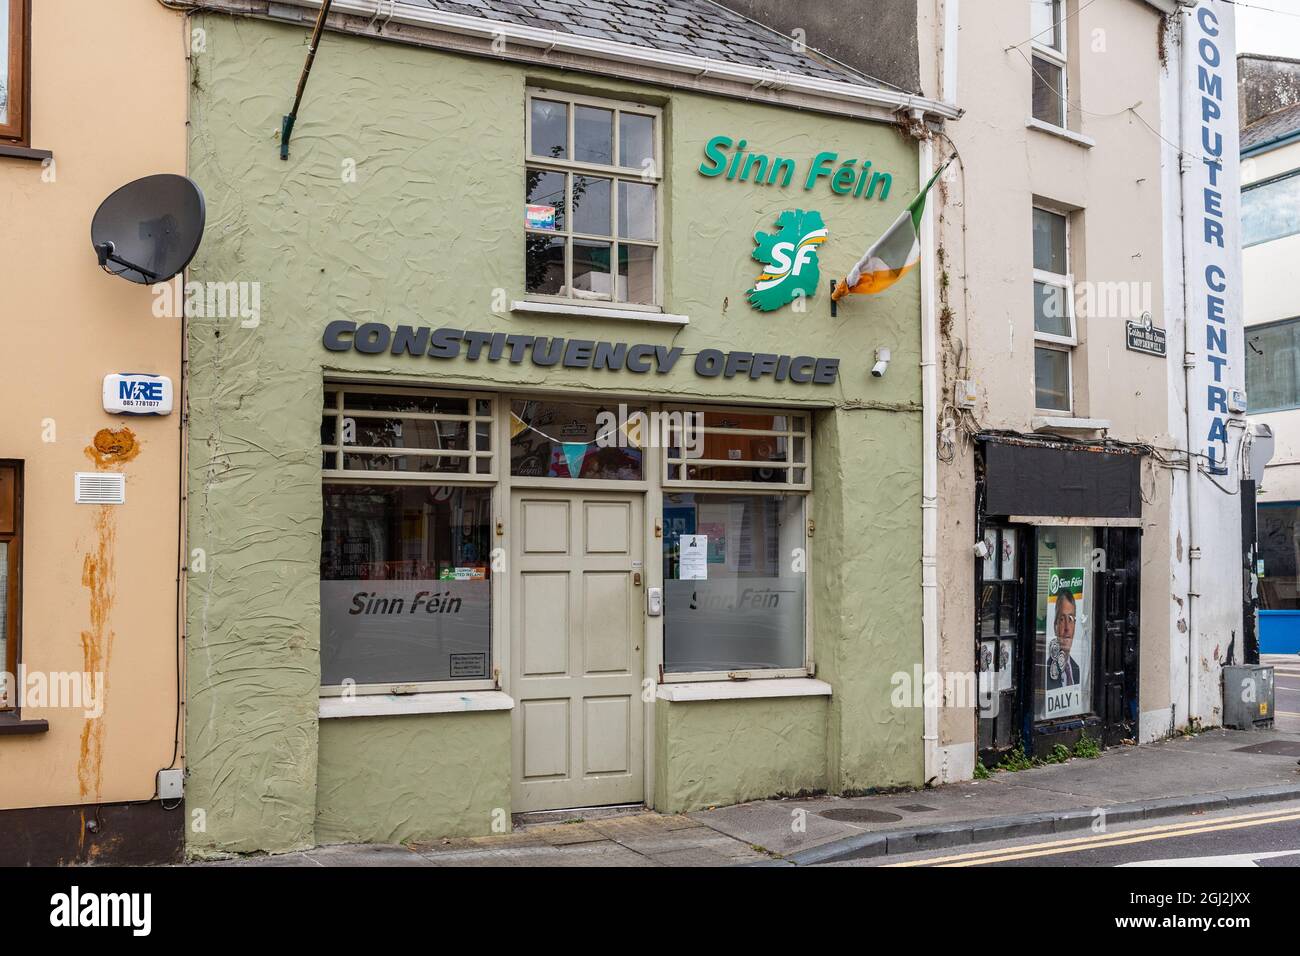 Sinn Fein constituency office in Tralee, Co. Kerry, Ireland. Stock Photo